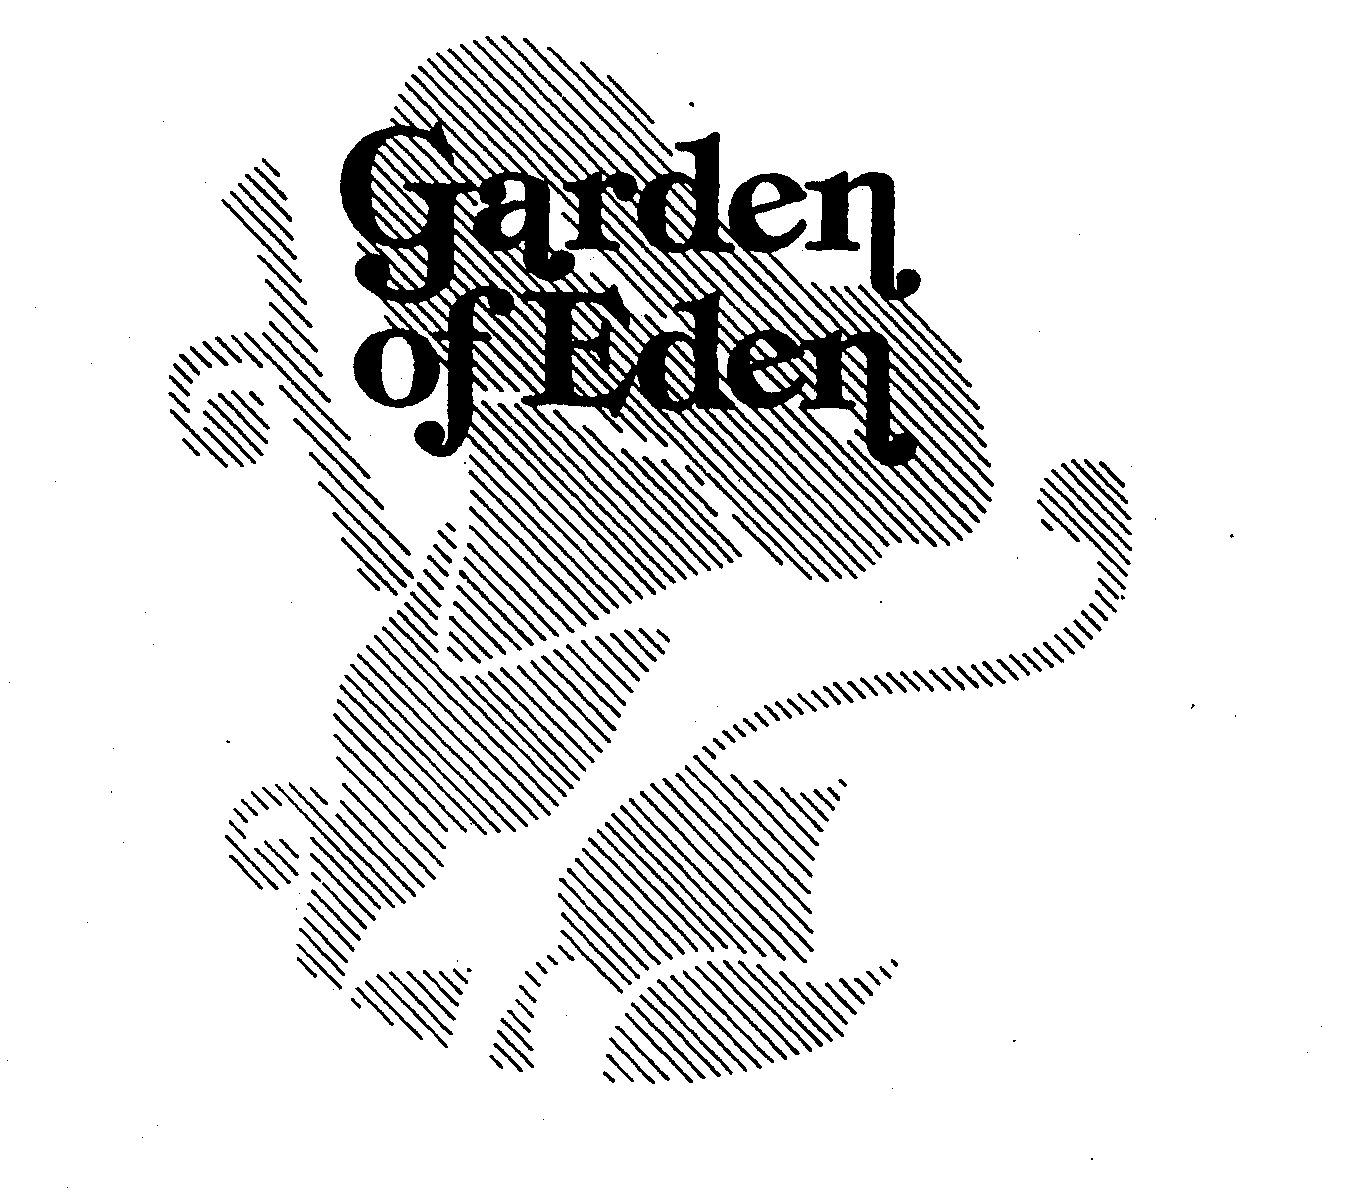 GARDEN OF EDEN - Garden of Eden, Inc. Trademark Registration